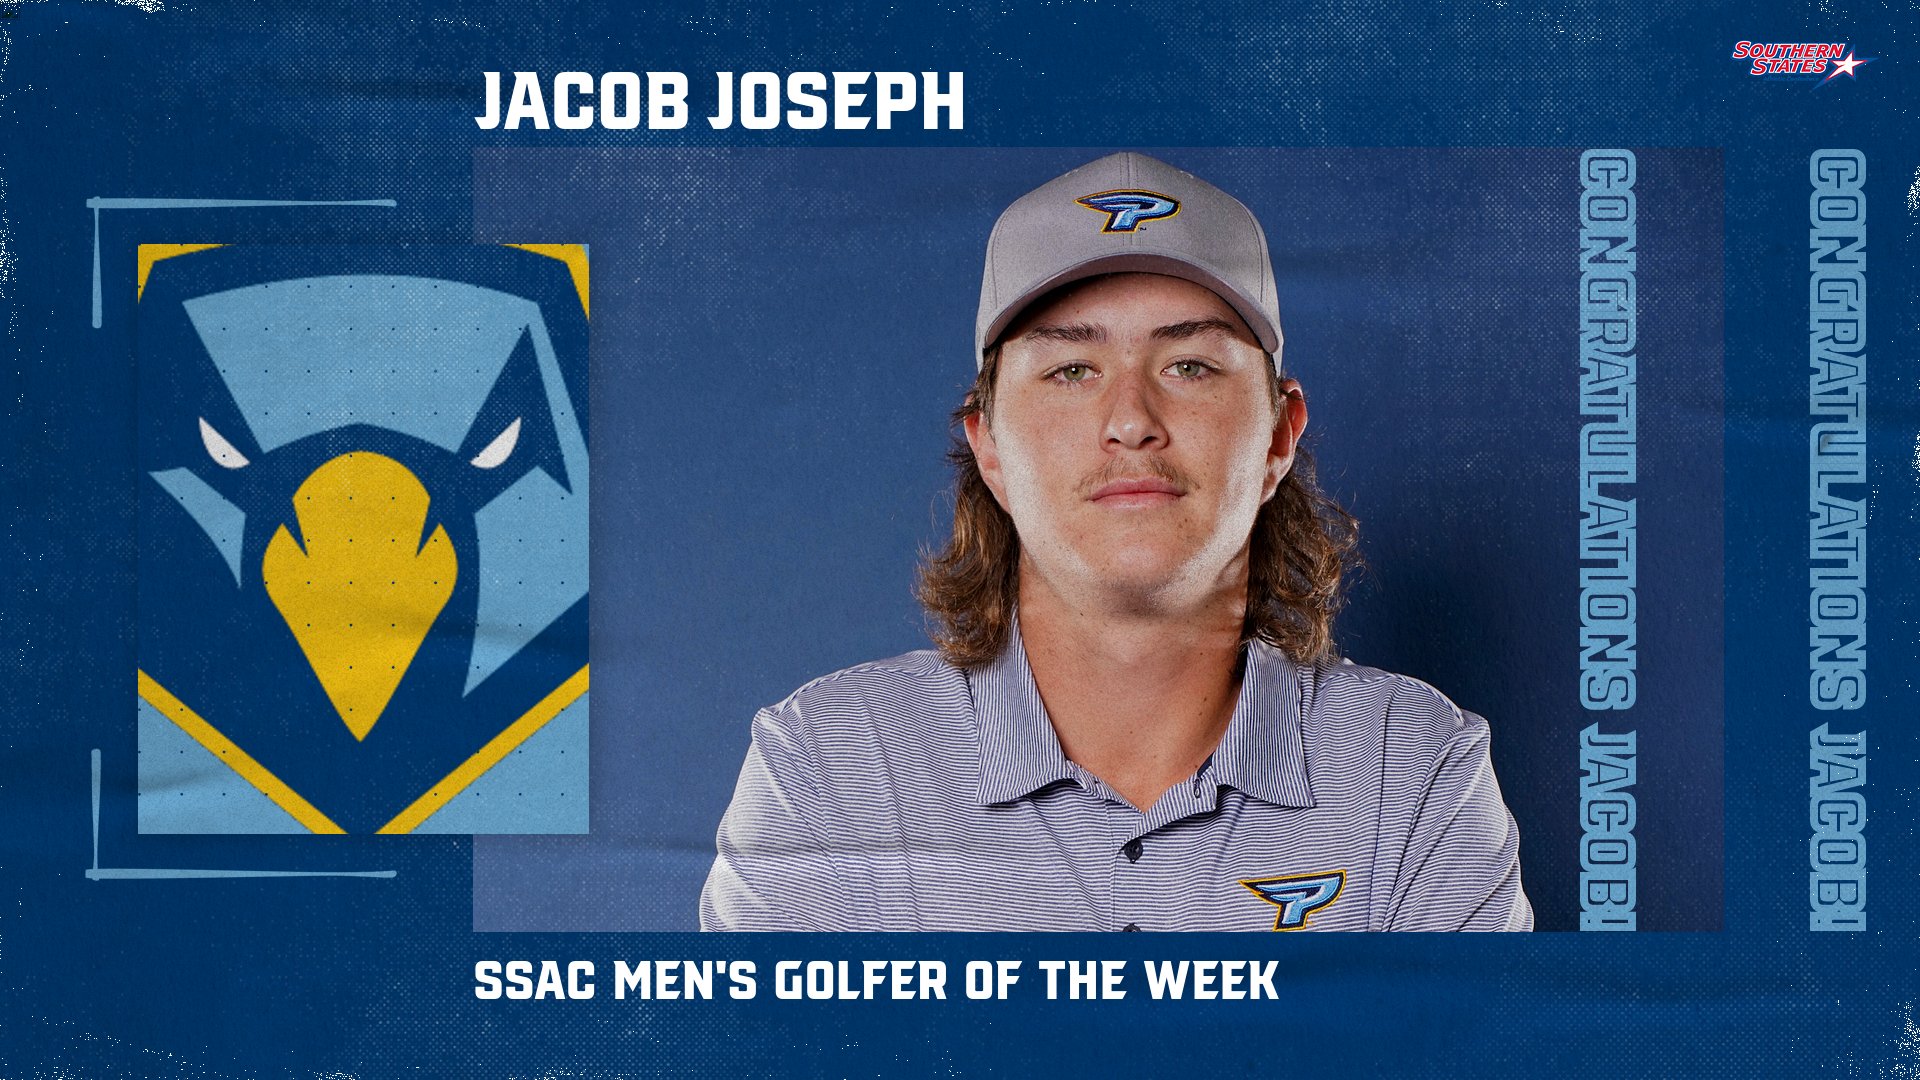 Jacob Joseph earns SSAC Men’s Golfer of the Week